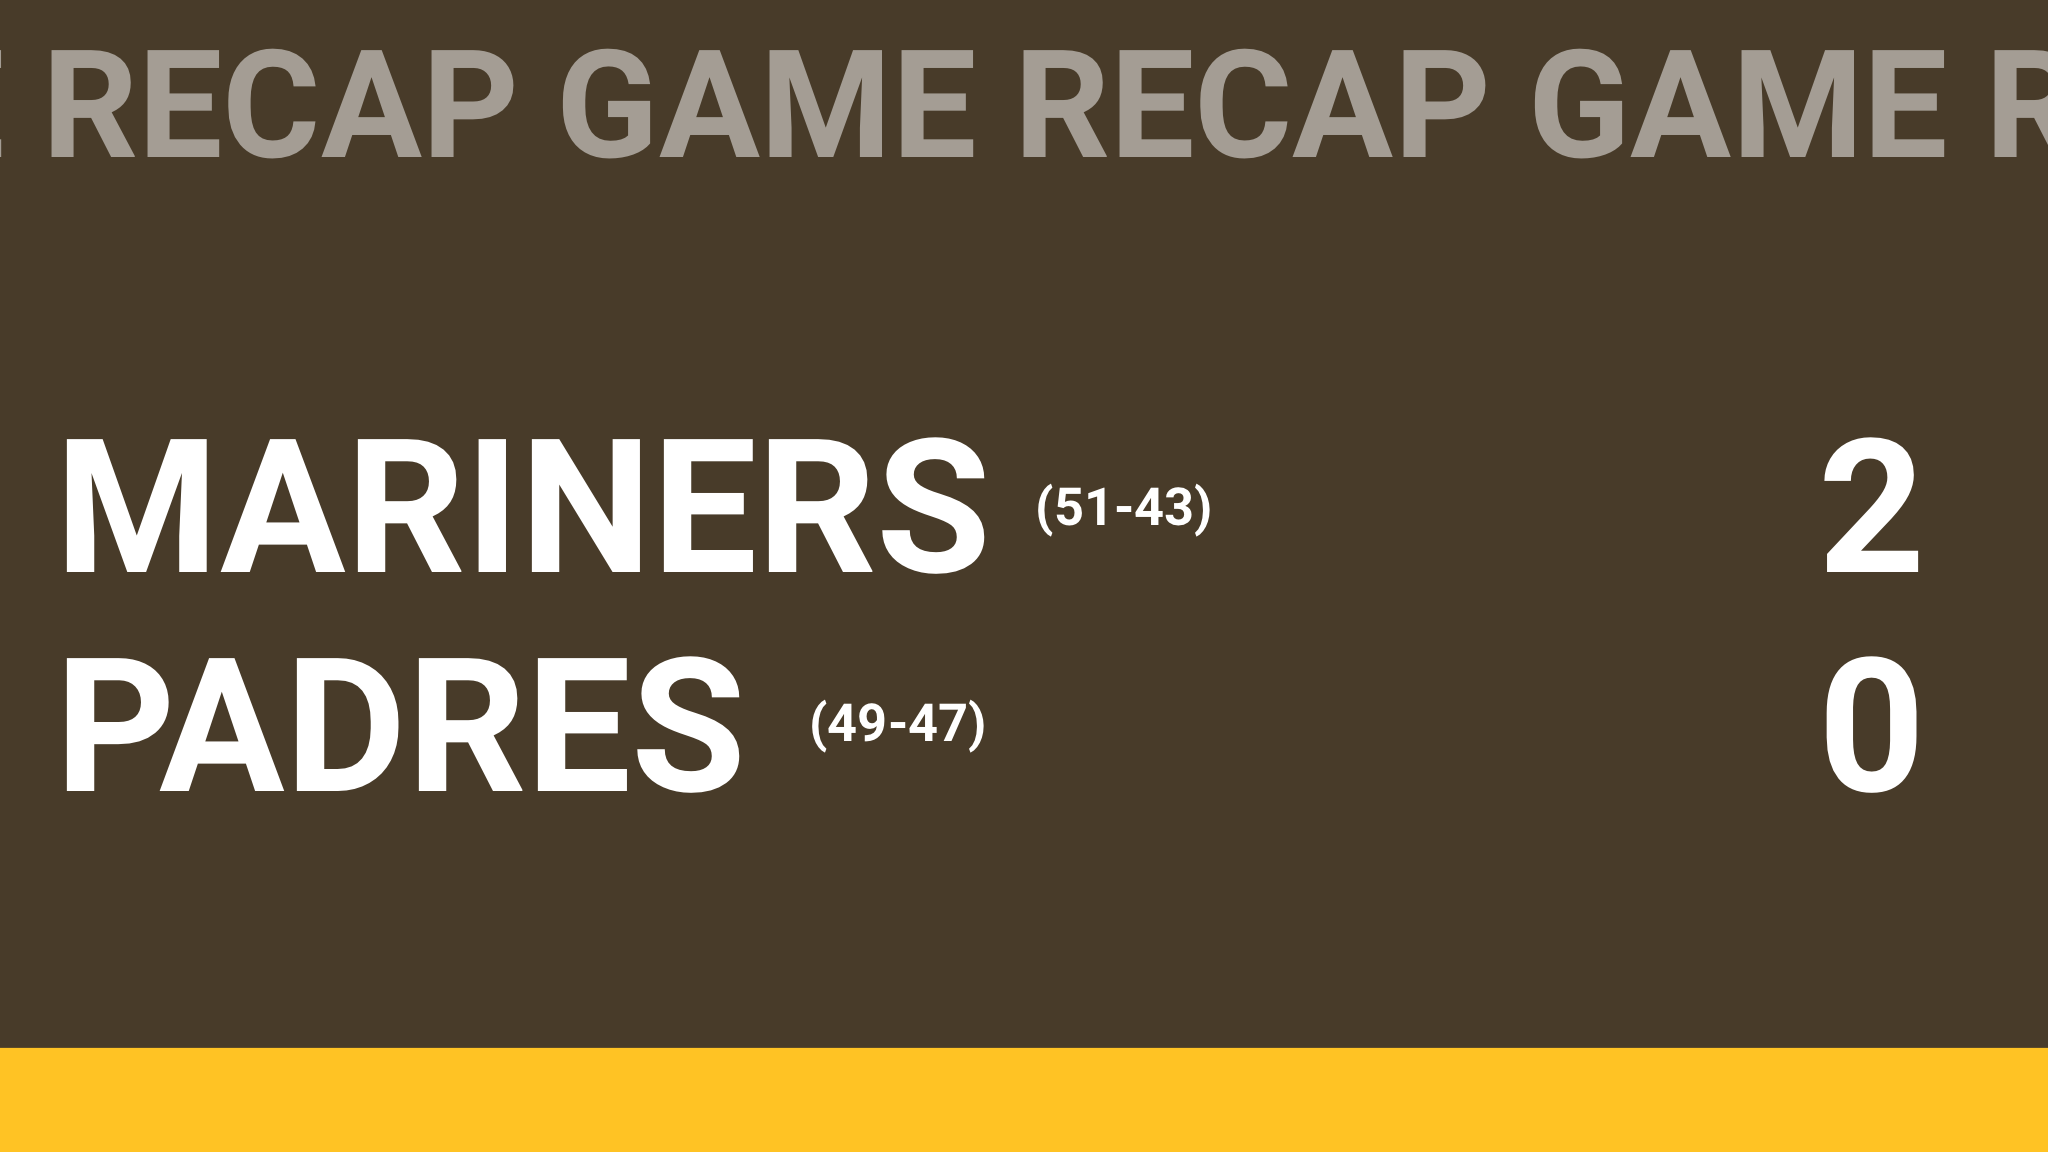 Final score: Mariners 2, Padres 0